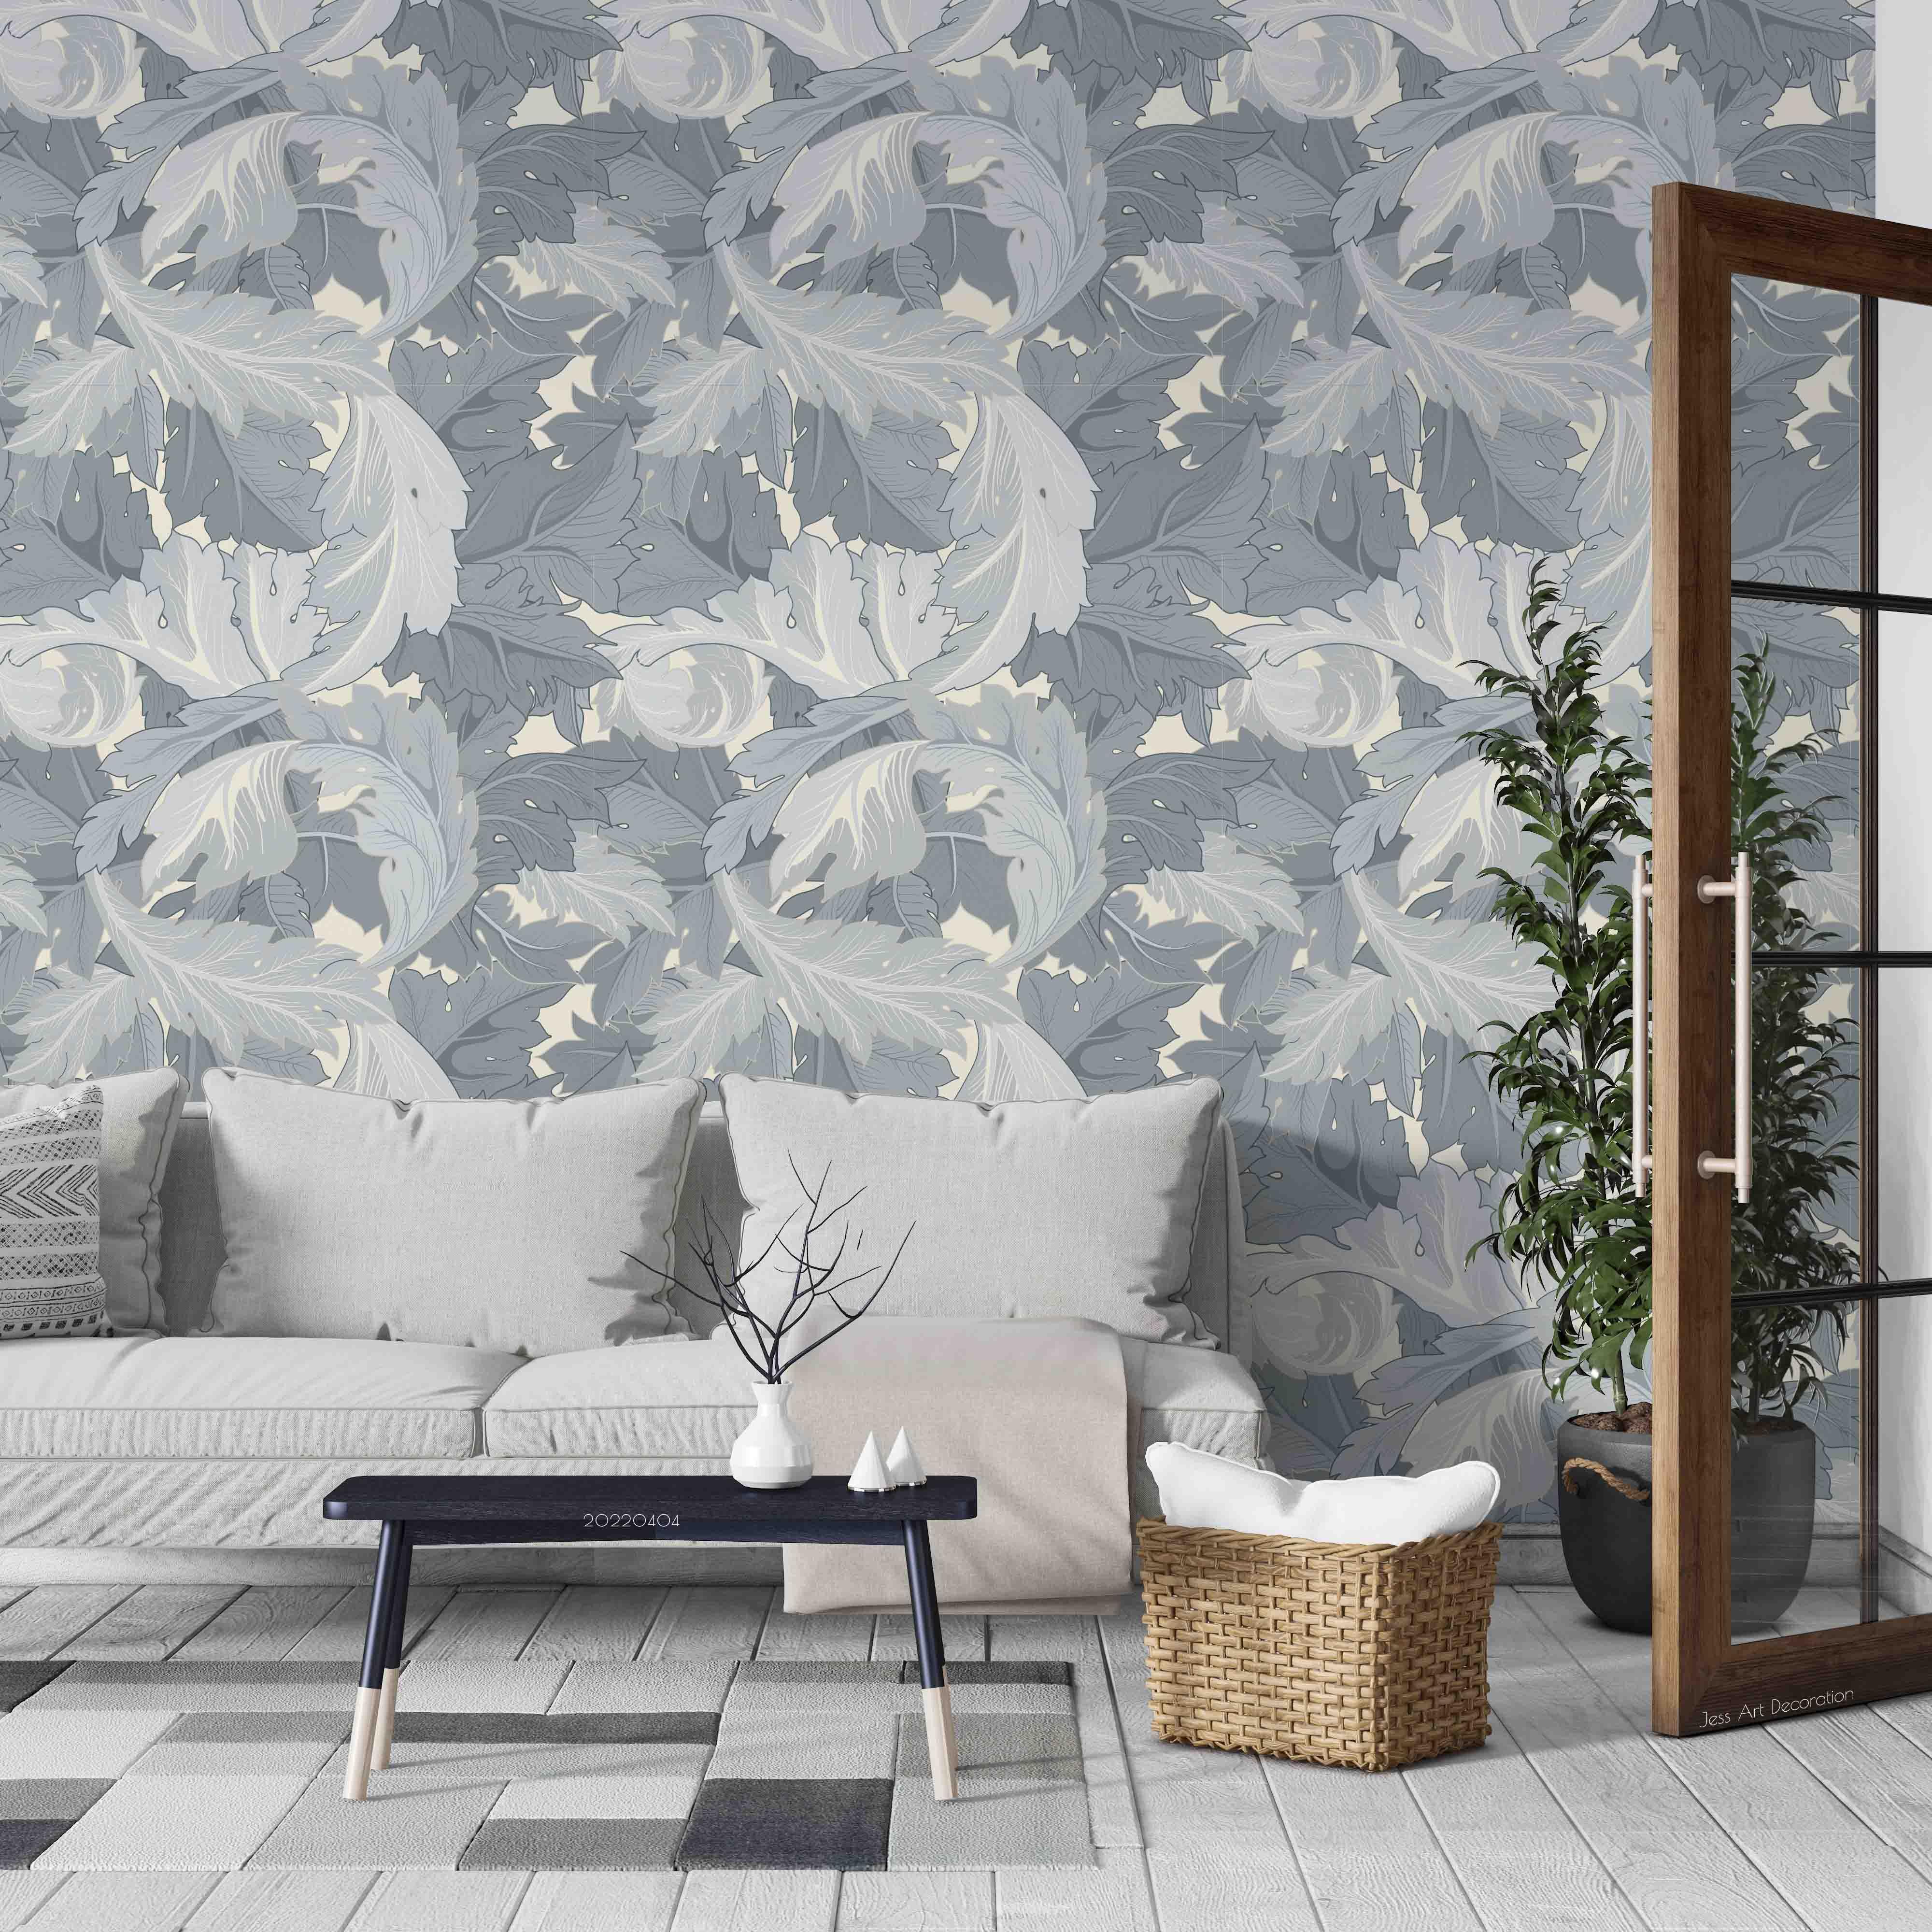 3D Vintage Plant Leaf Grey Pattern Wall Mural Wallpaper GD 4042- Jess Art Decoration